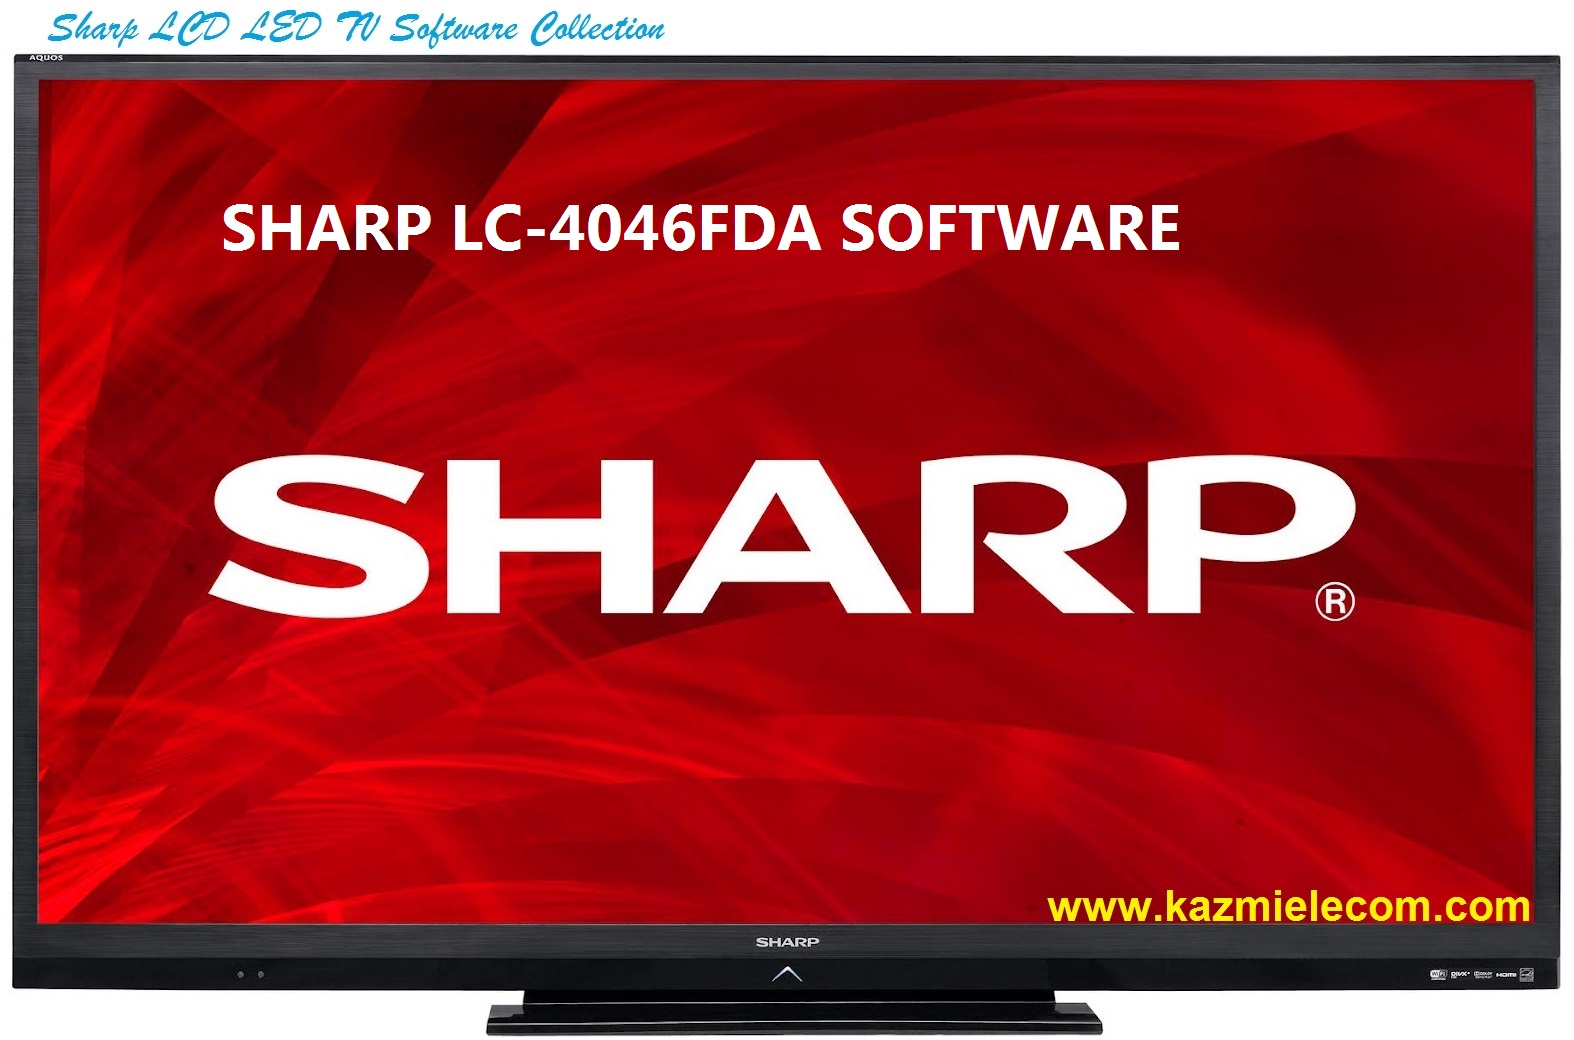 Sharp Lc-4046Fda